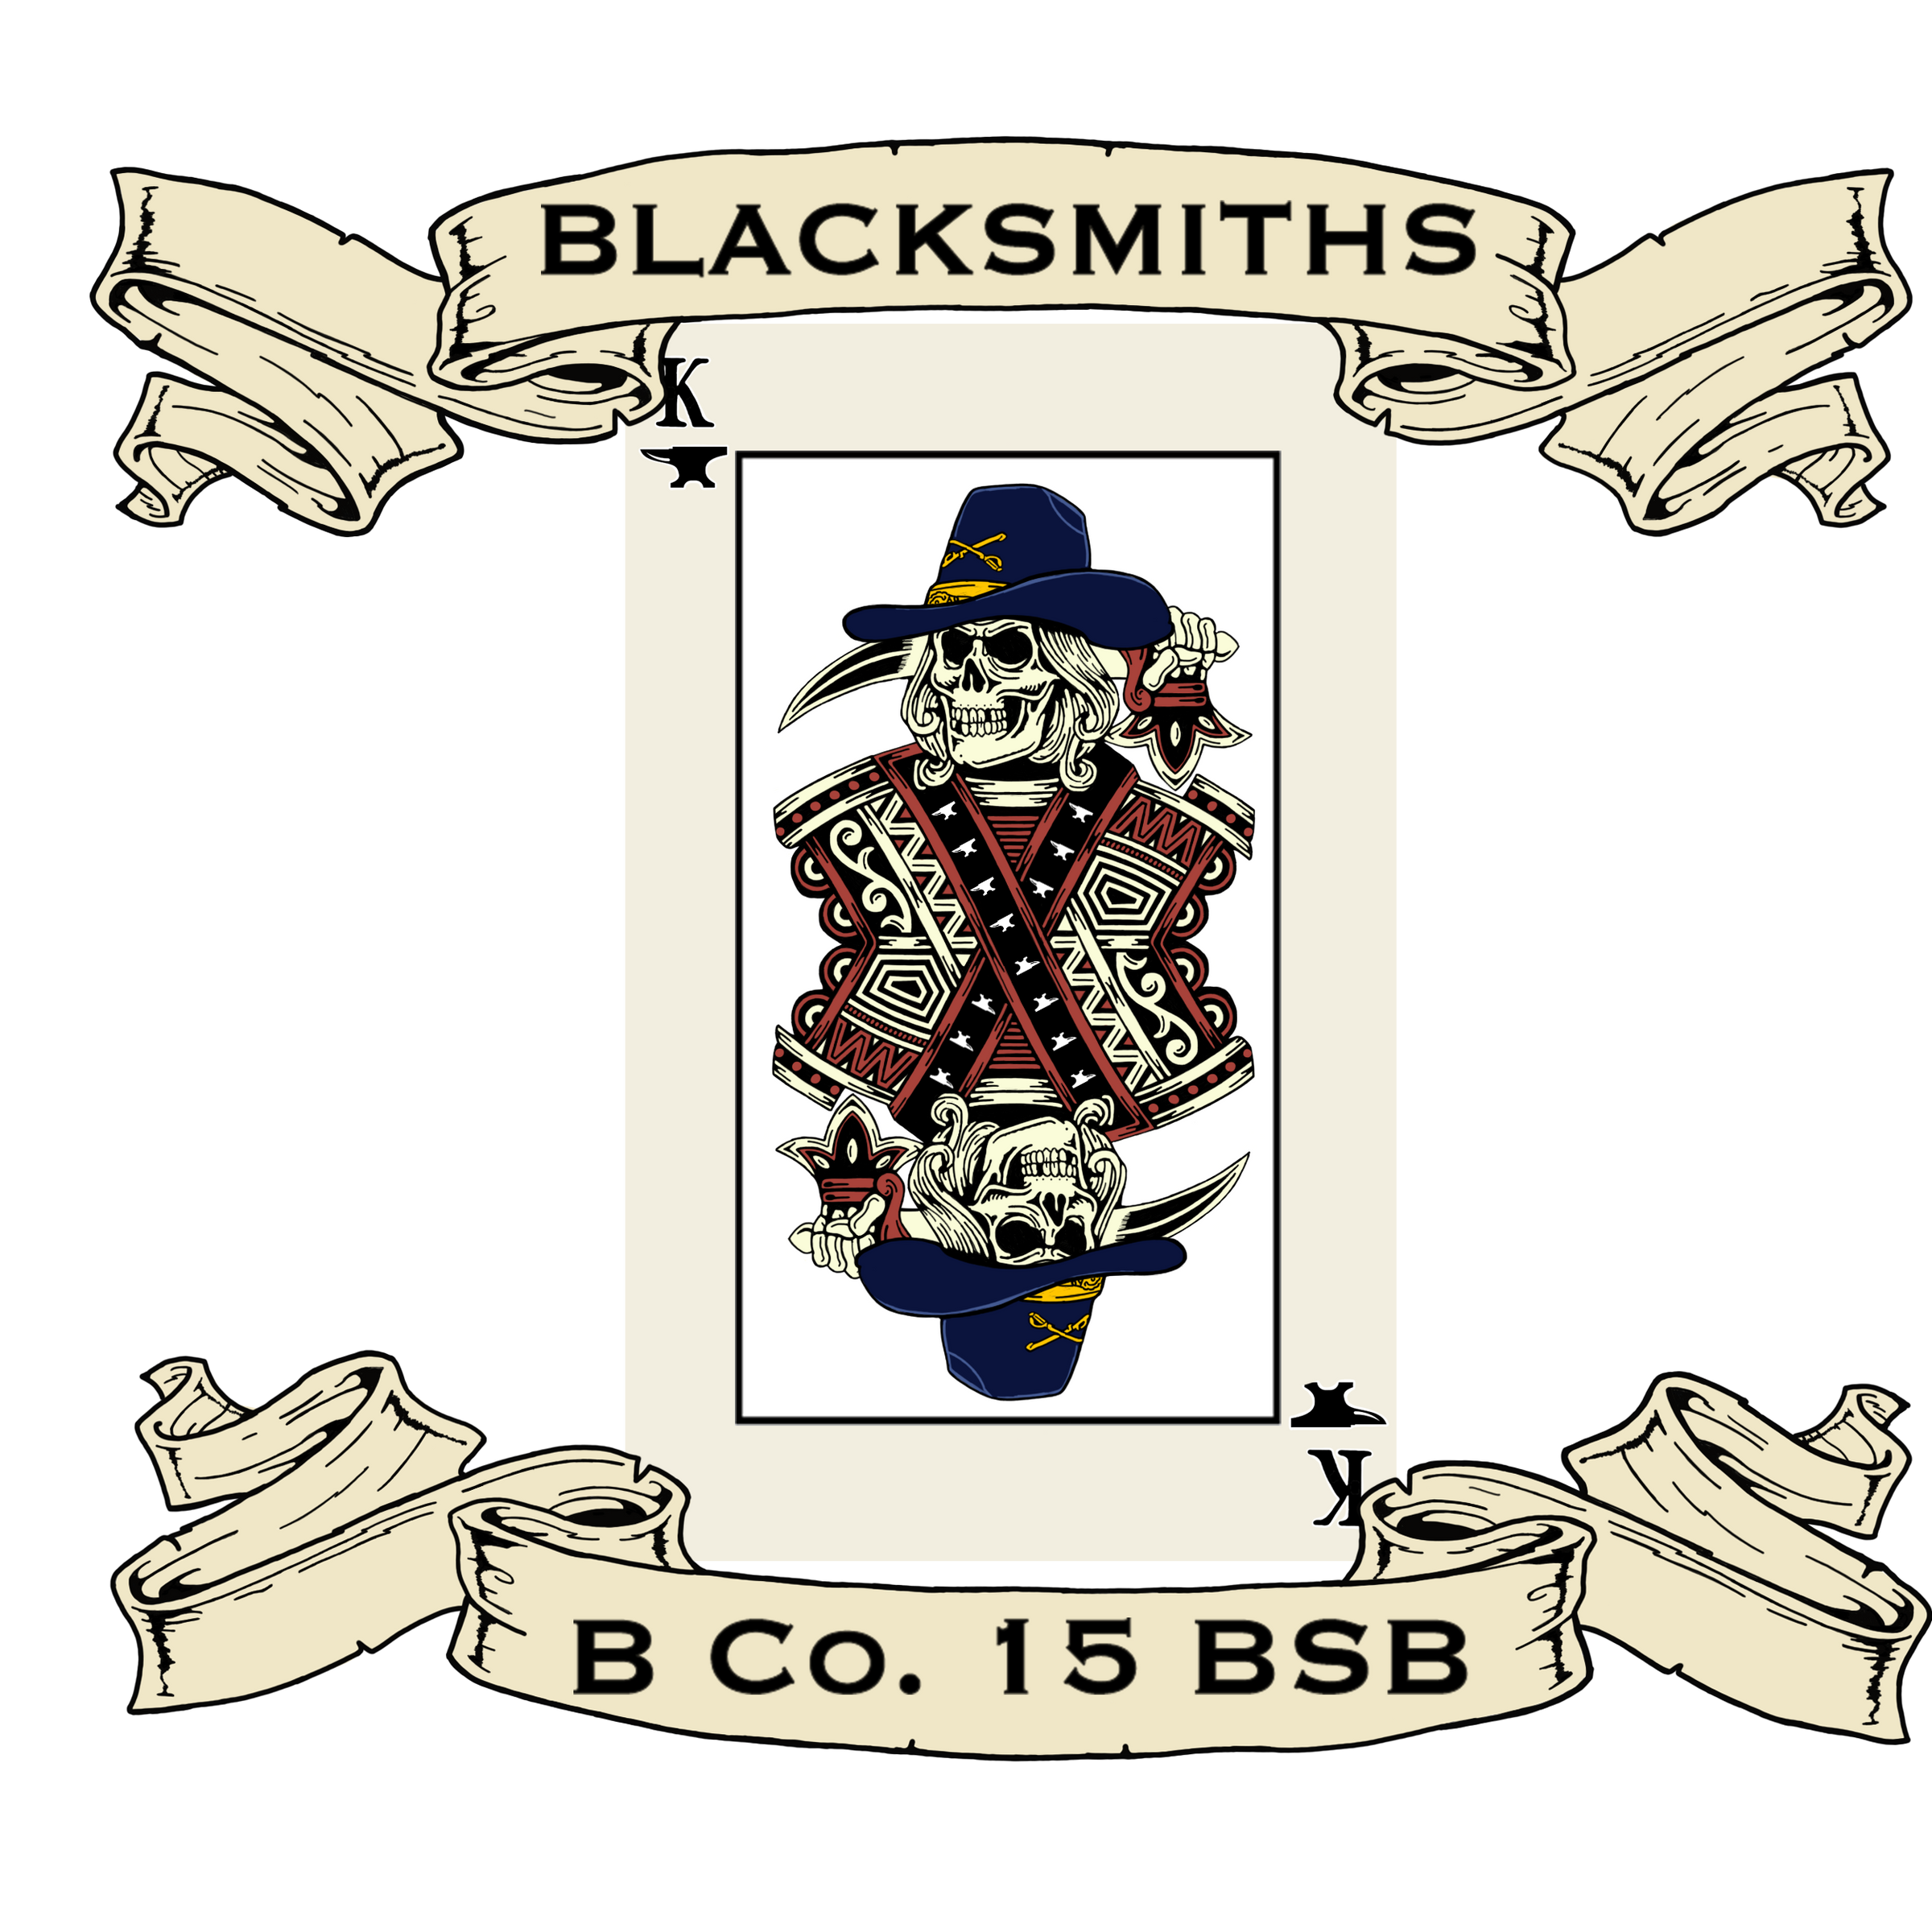 B Co, 15 BSB "Blacksmiths"